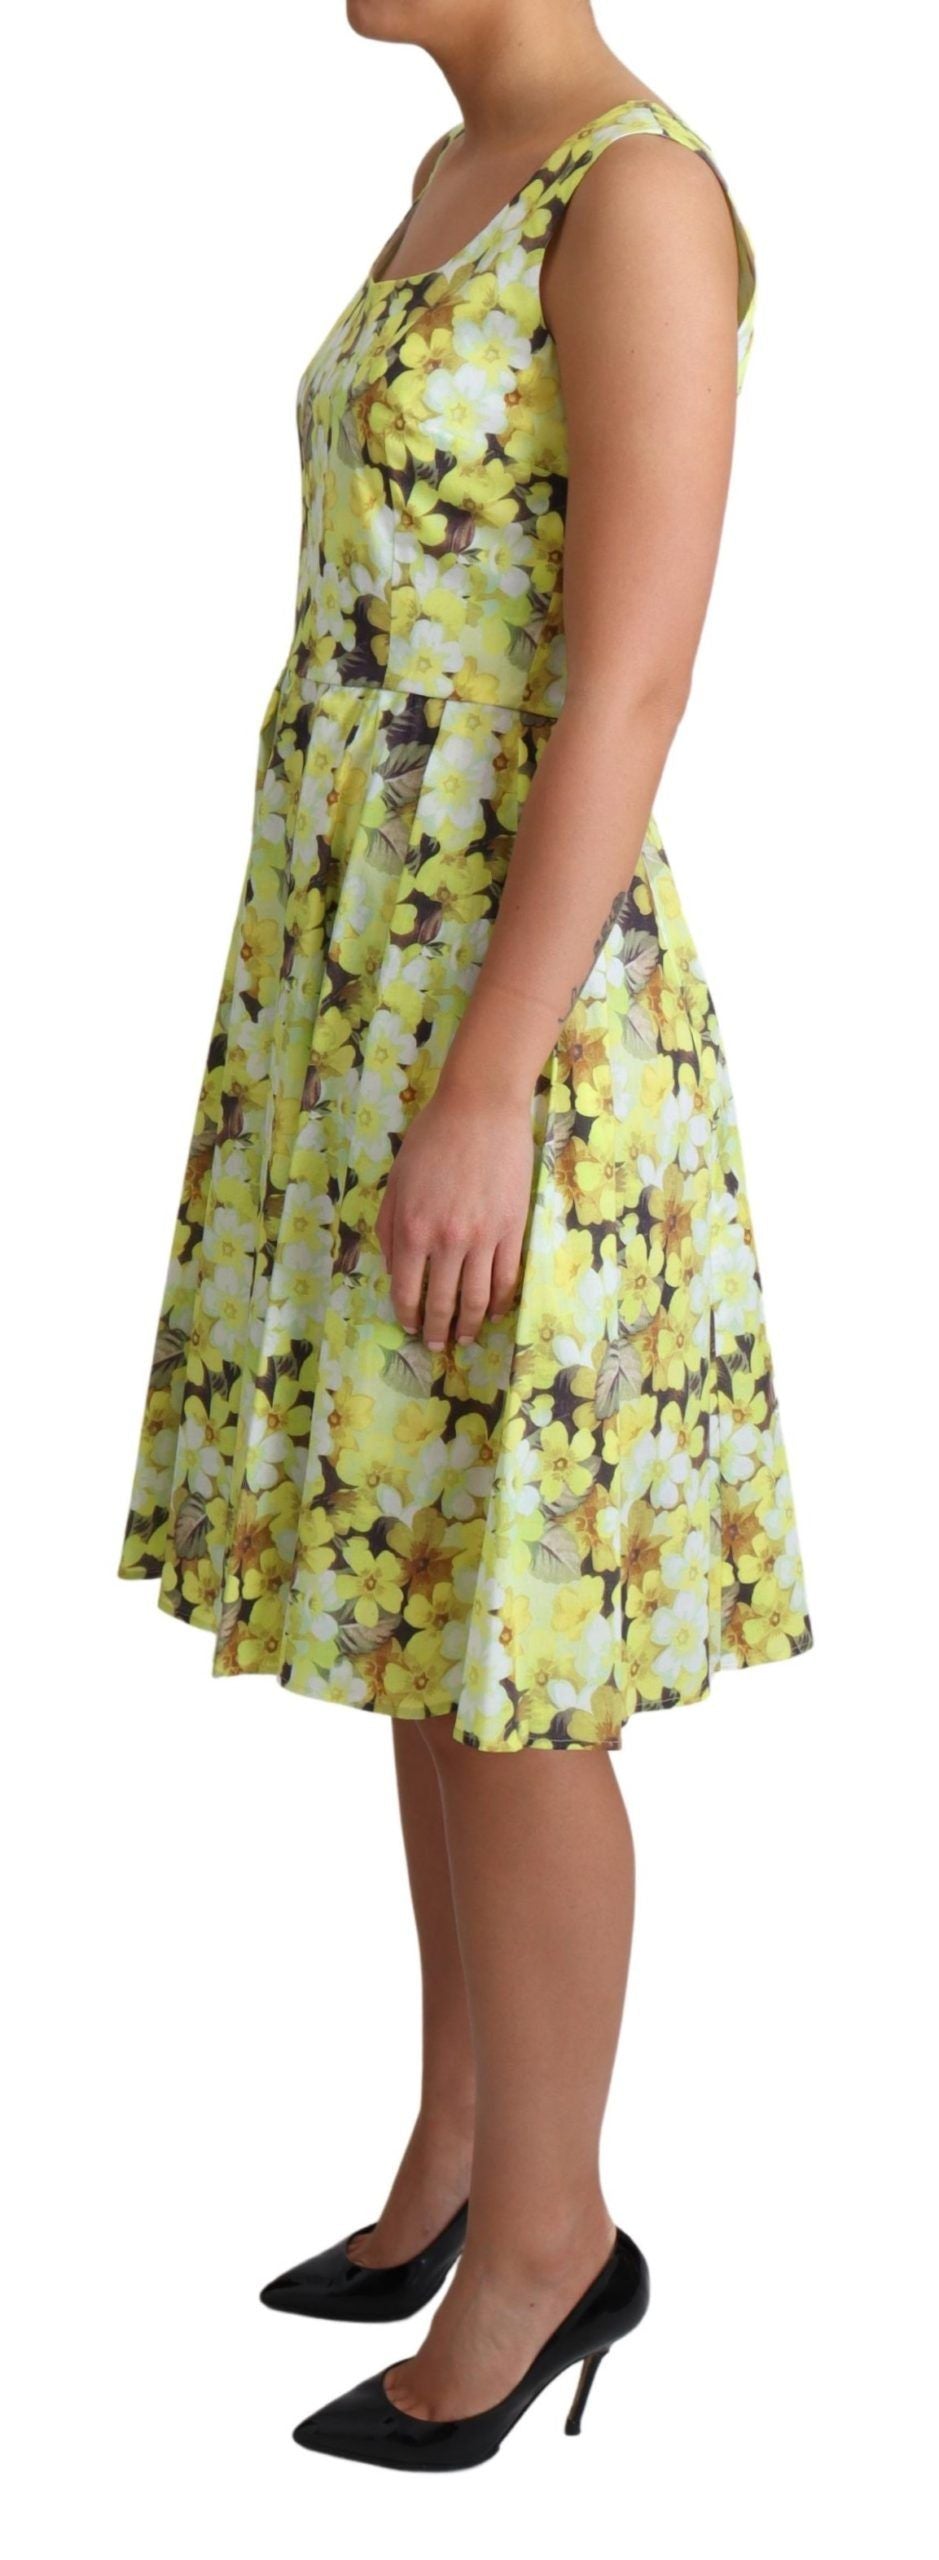 Elegant Yellow Floral A-Line Sleeveless Dress